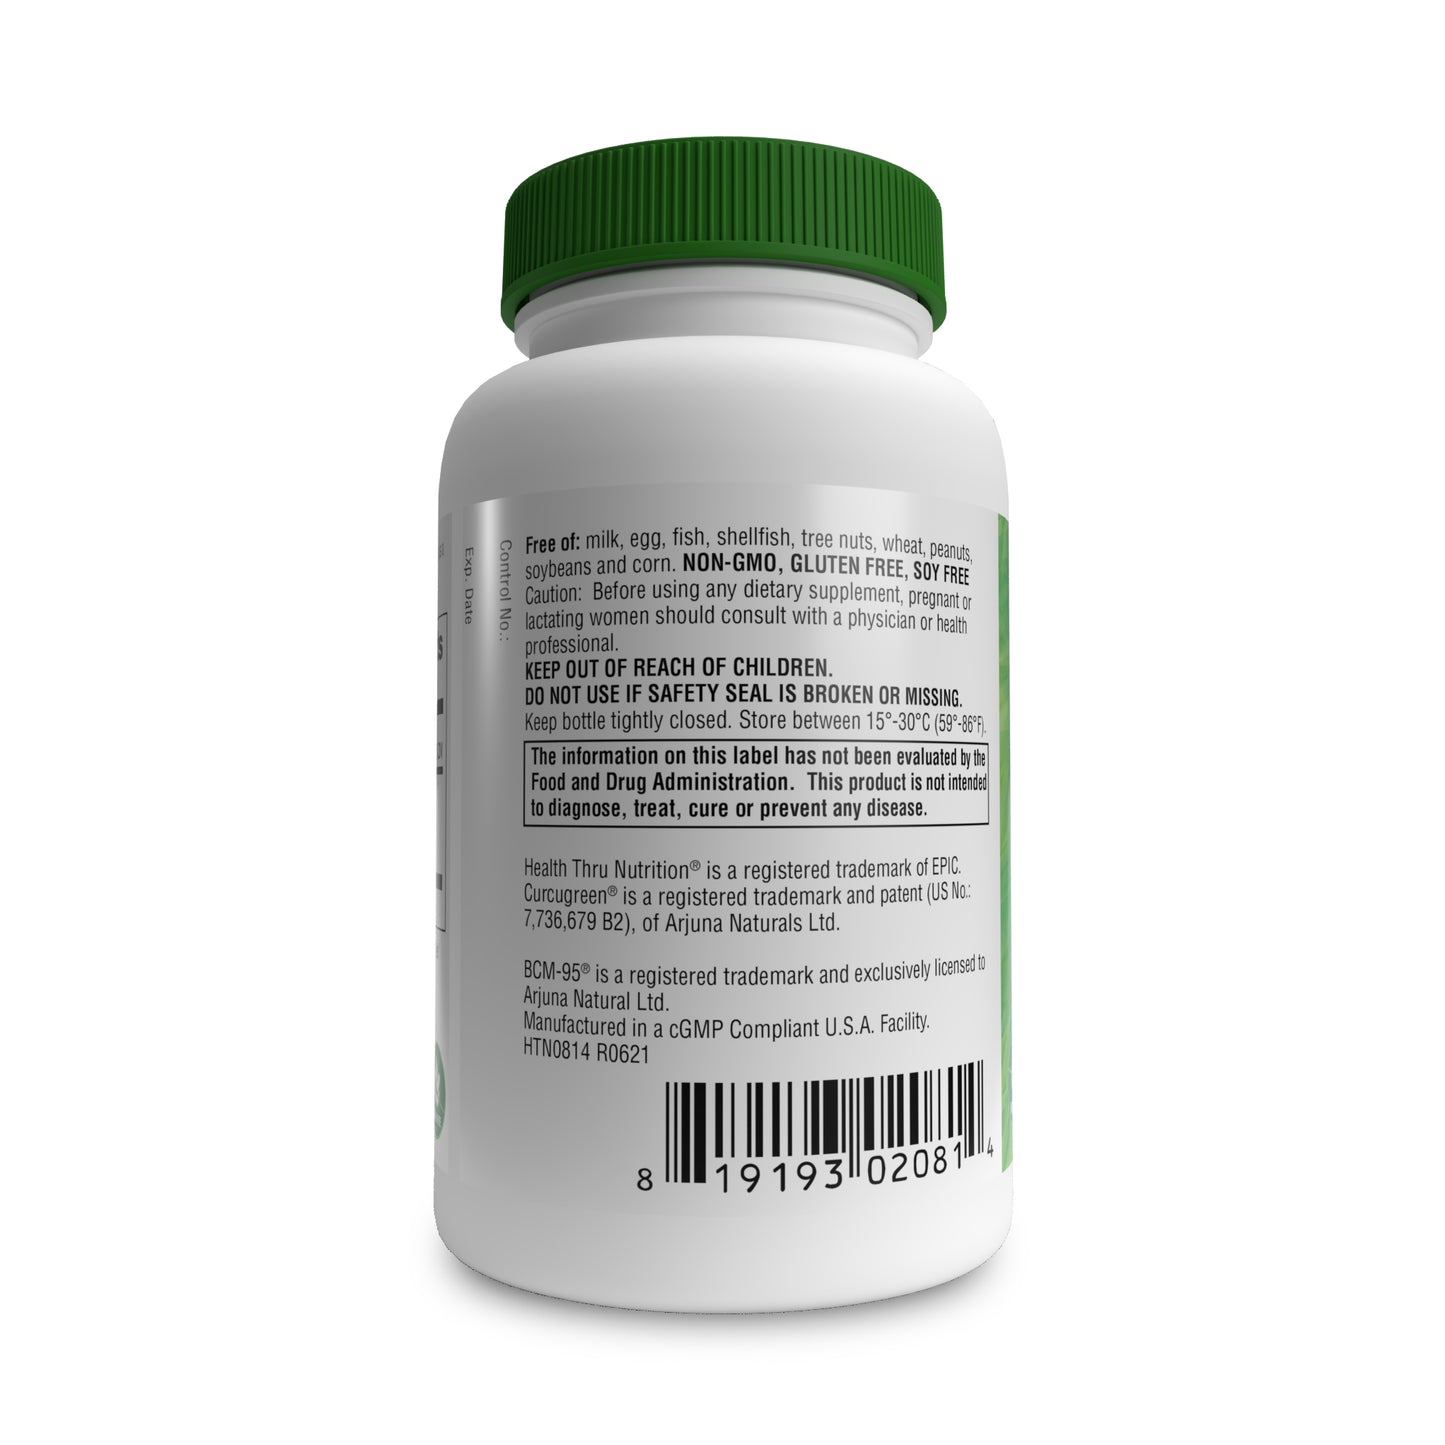 Curcumin 650mg BCM-95® Curcuminoids Complex (NON-GMO) (60 Softgels)